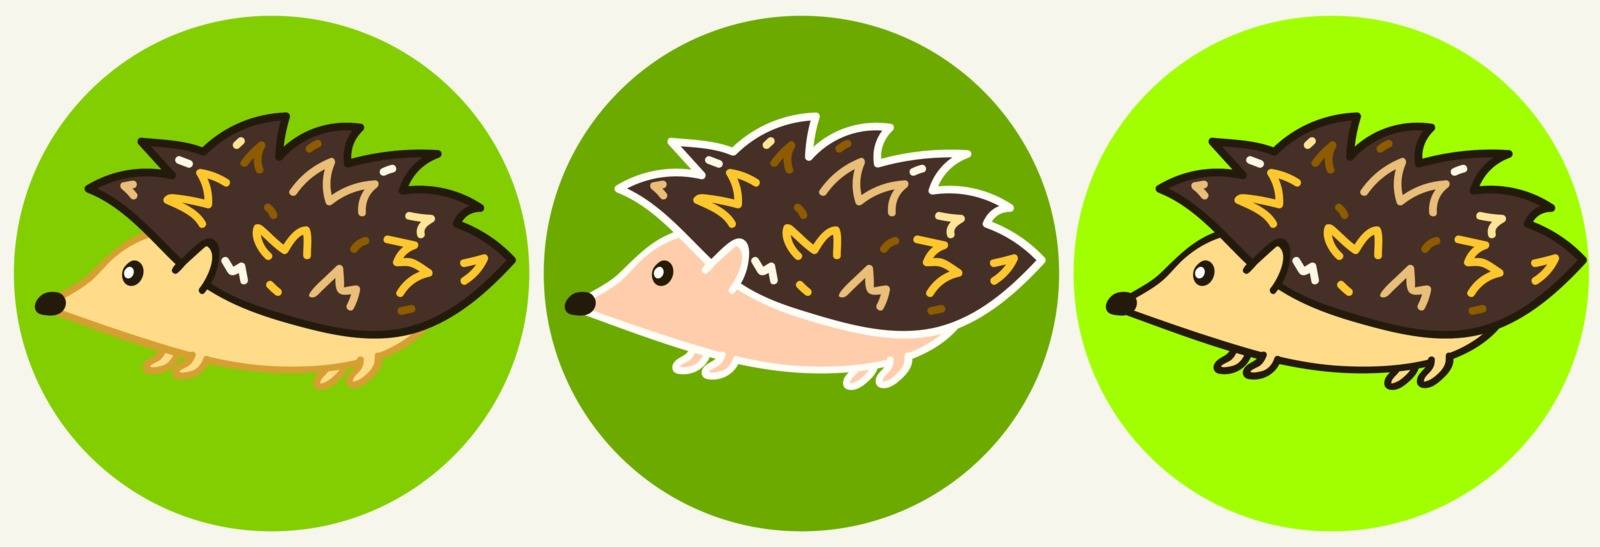 Cute cartoon hedgehog icons by tatahnka